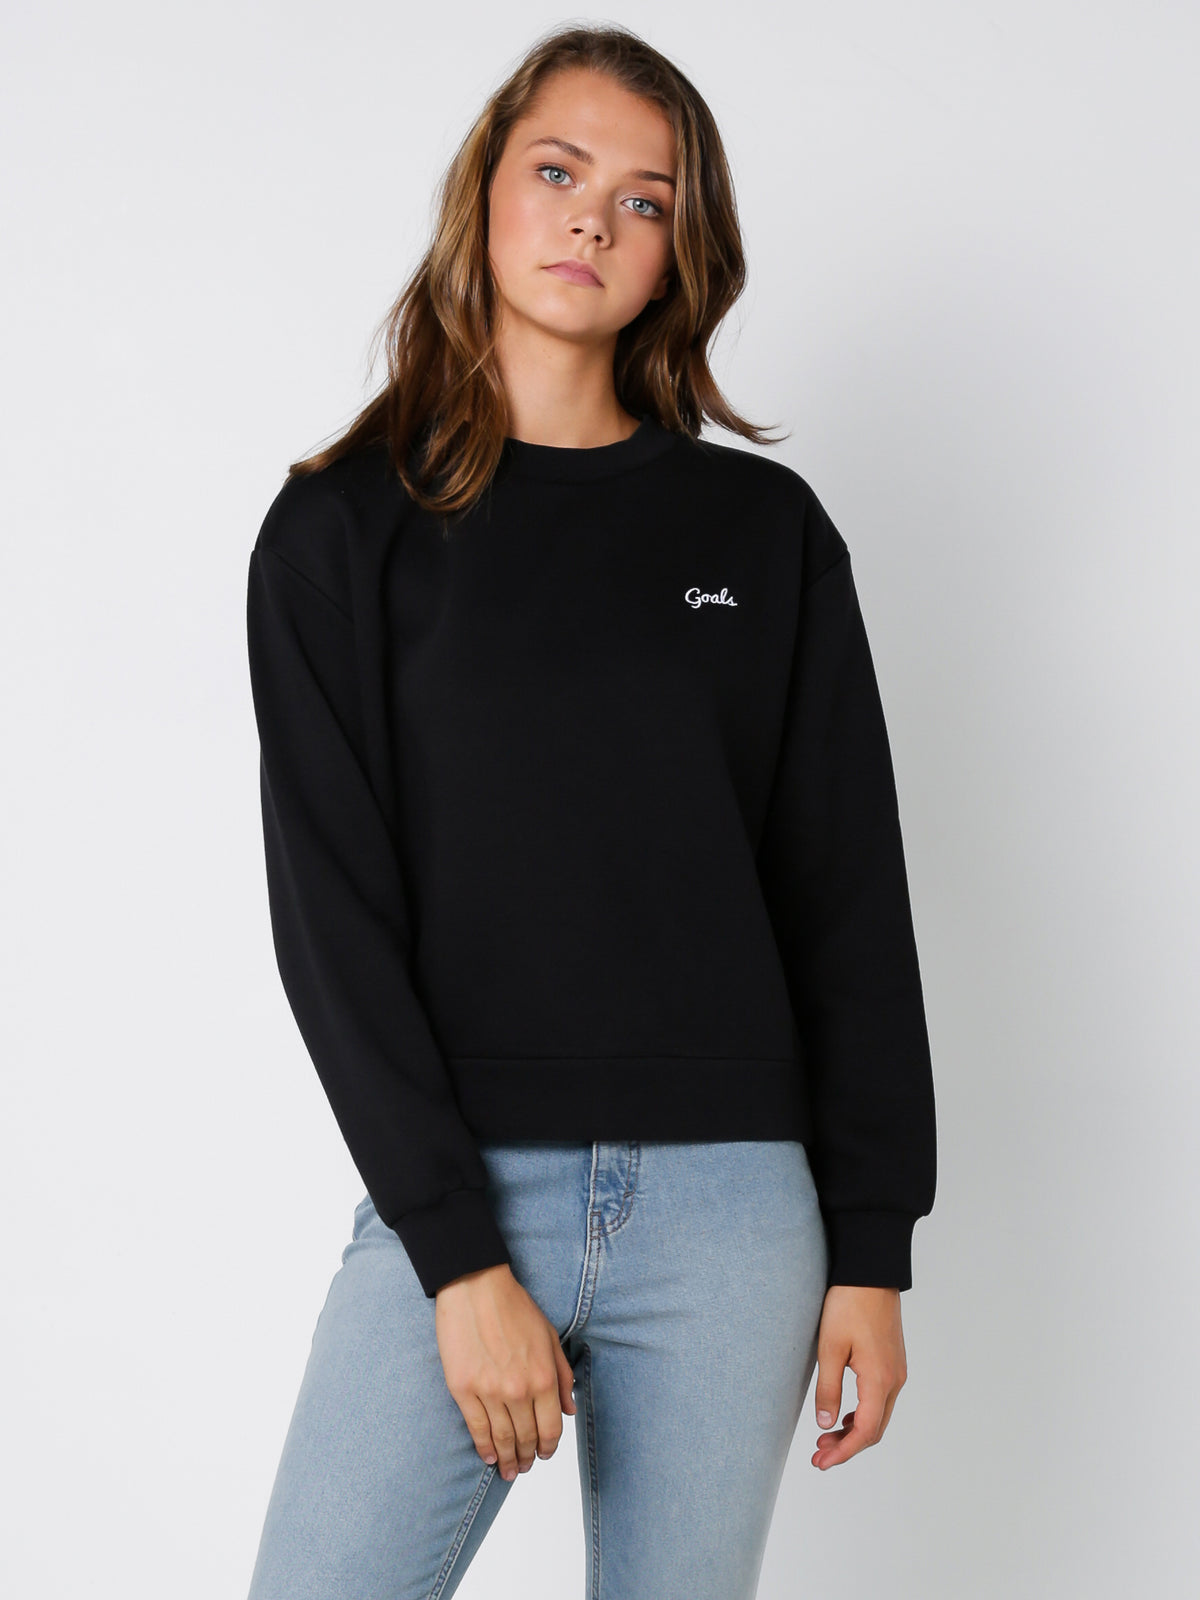 Goals Slogan Sweater in Black